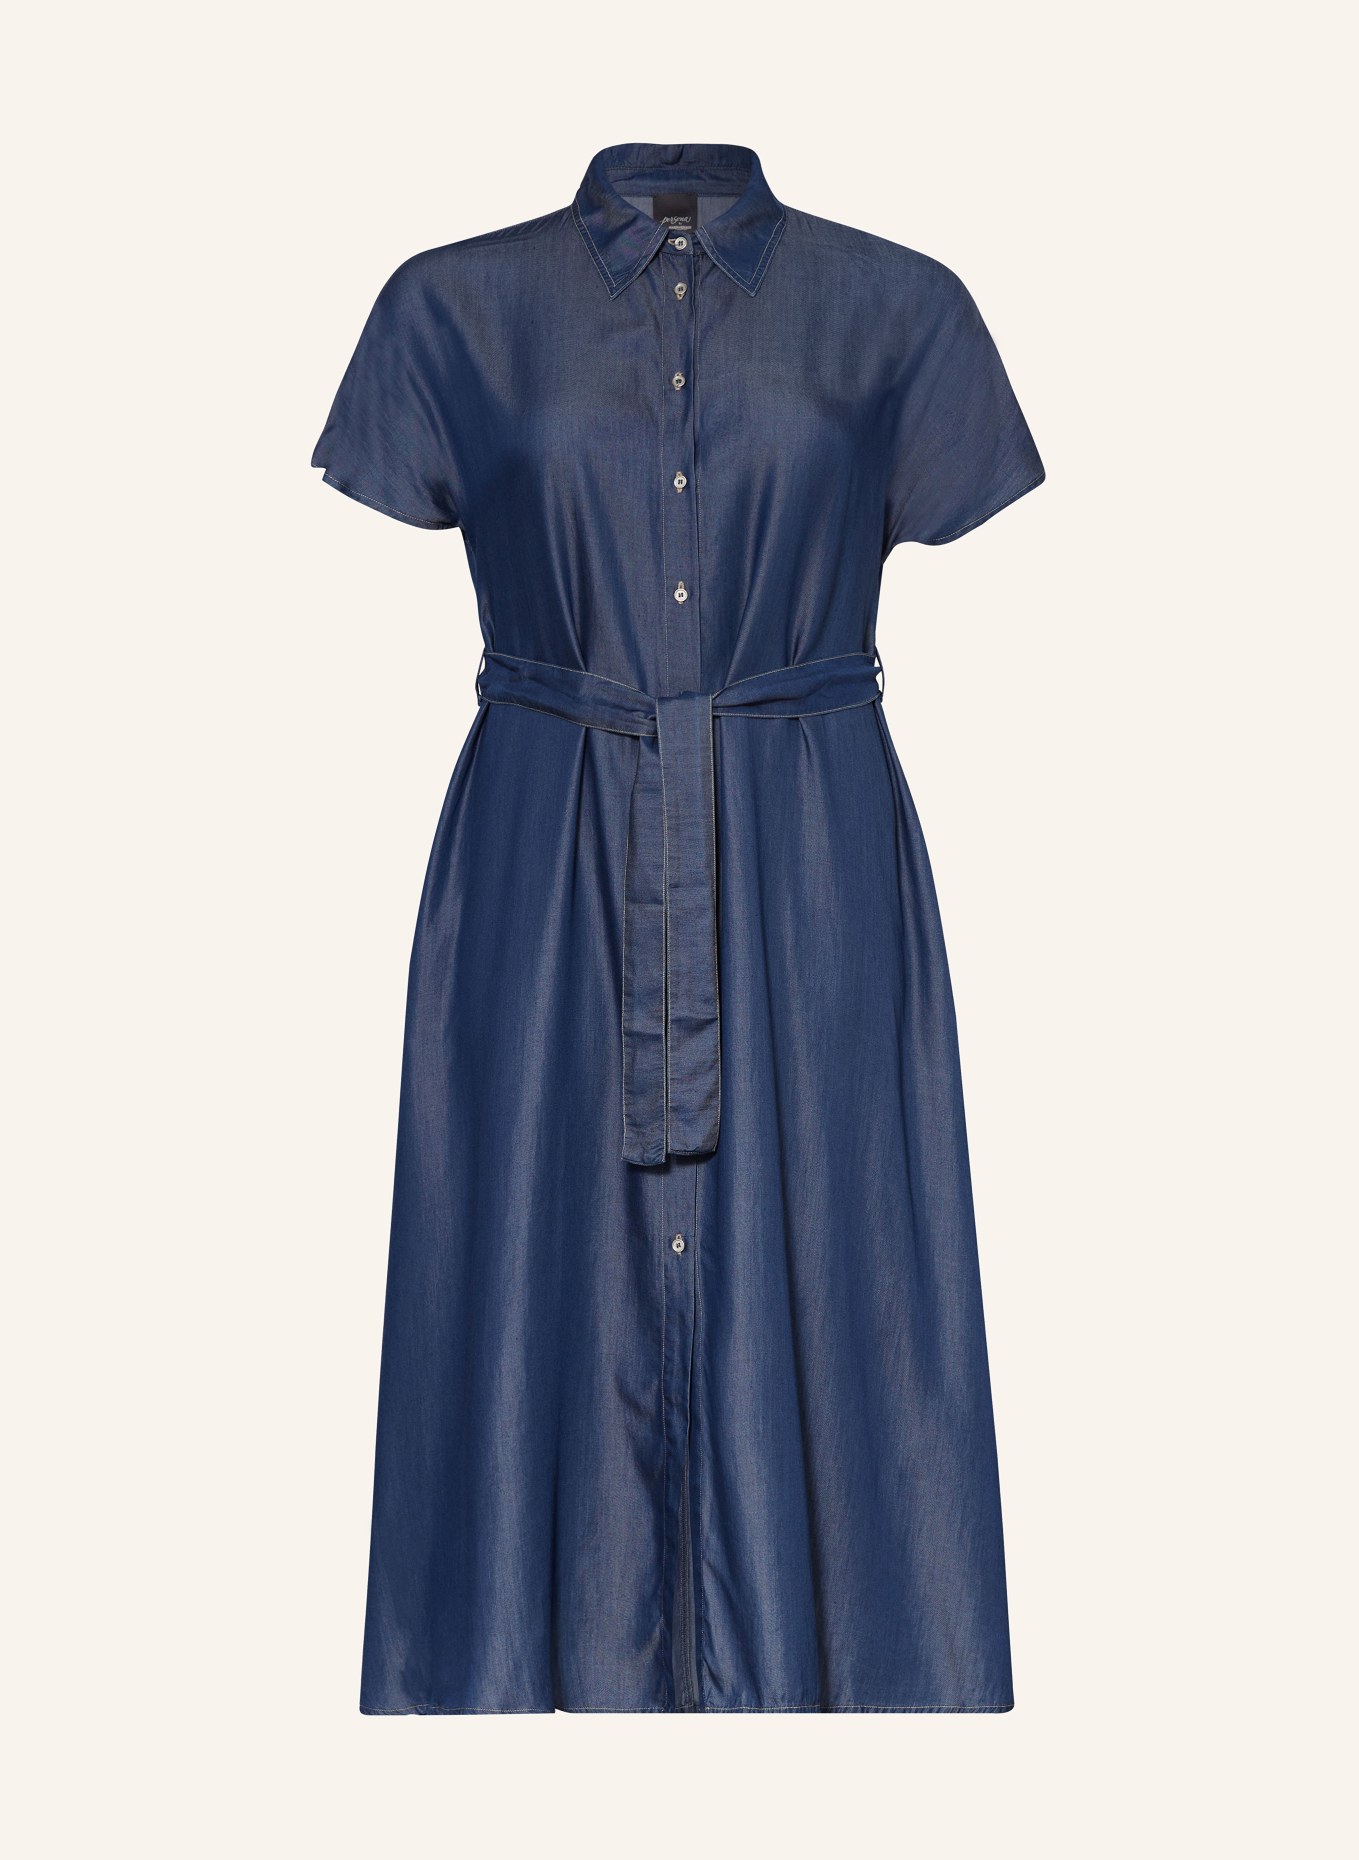 MARINA RINALDI PERSONA Hemdblusenkleid in Jeansoptik, Farbe: BLAU (Bild 1)